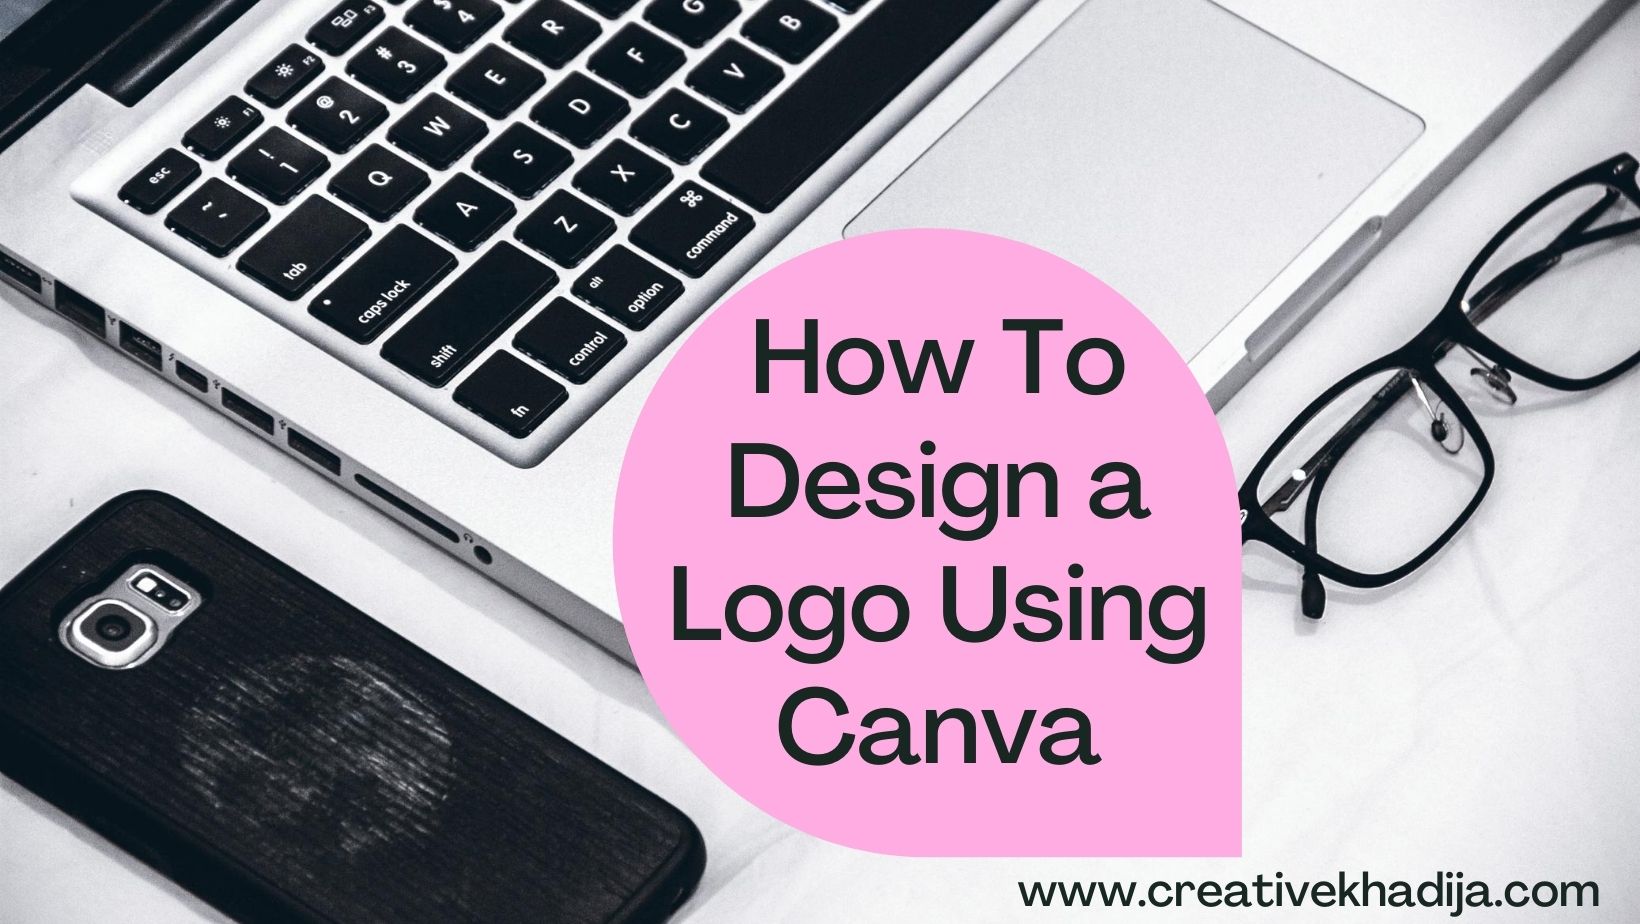 How To Build a Logo Using Canva Graphic Design App